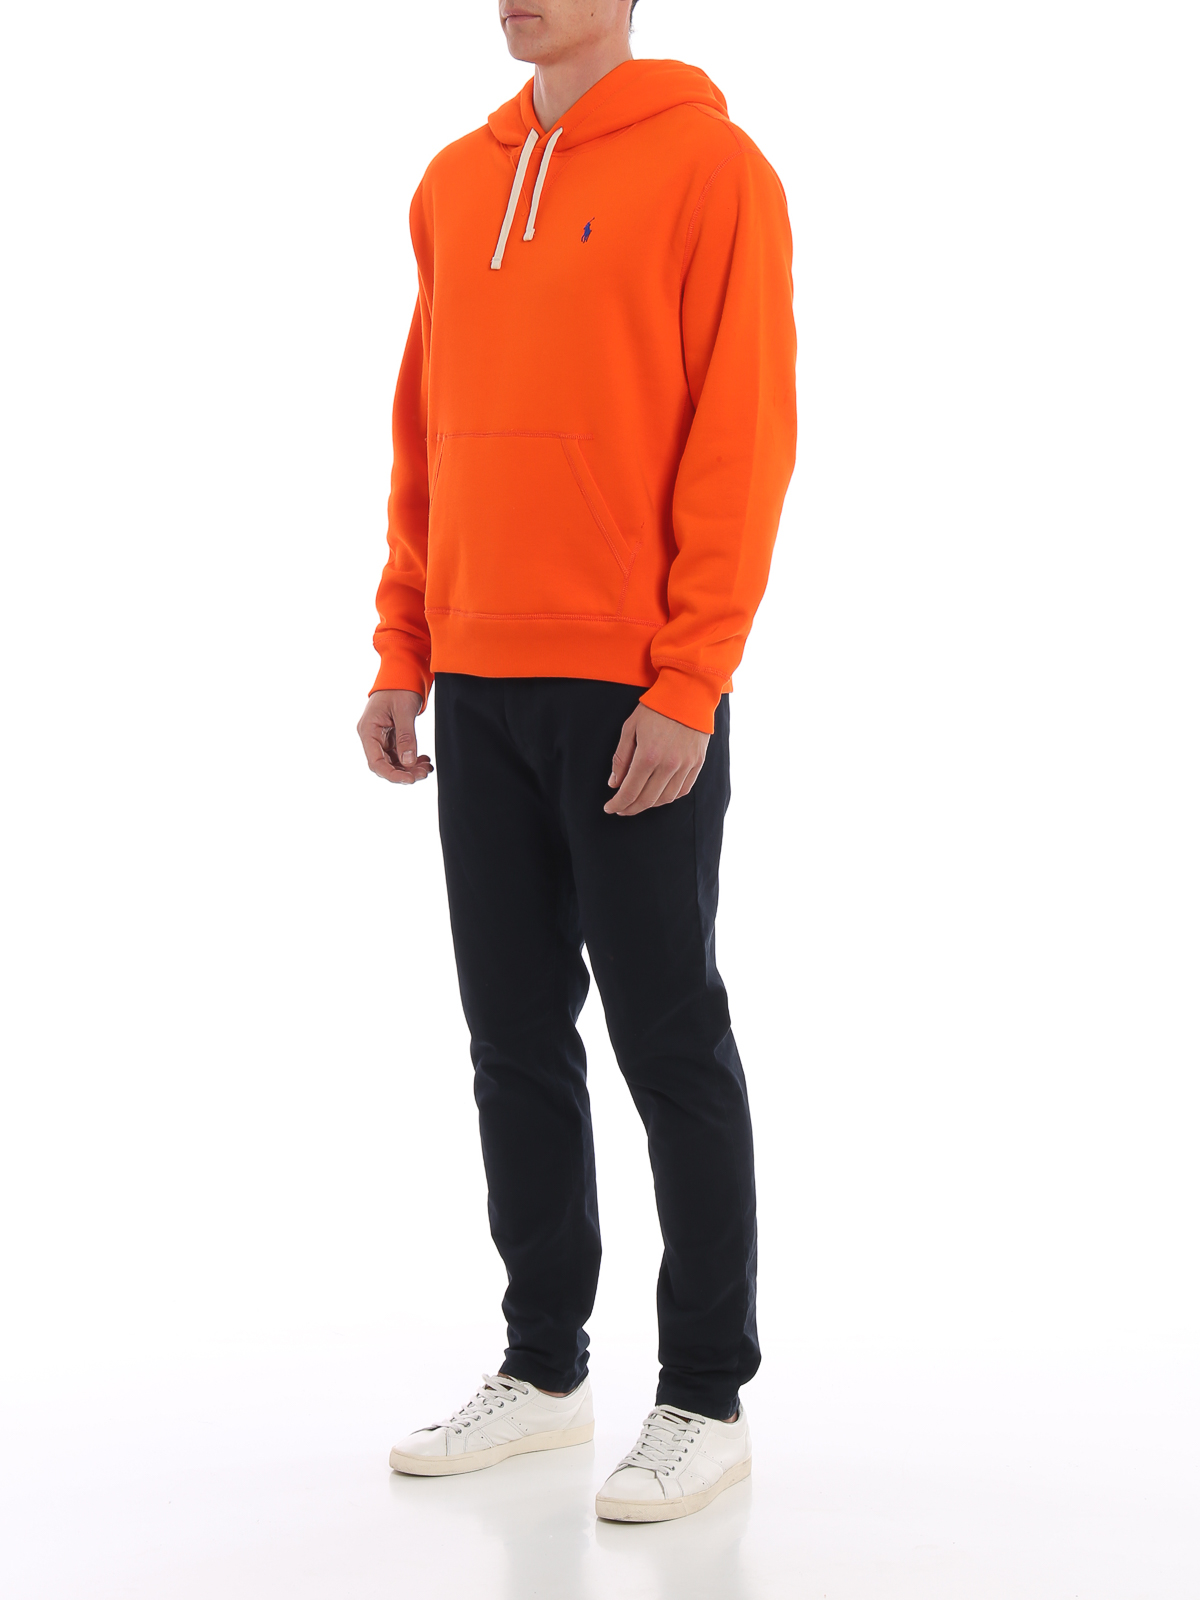 Polo Ralph Lauren - Orange cotton blend 